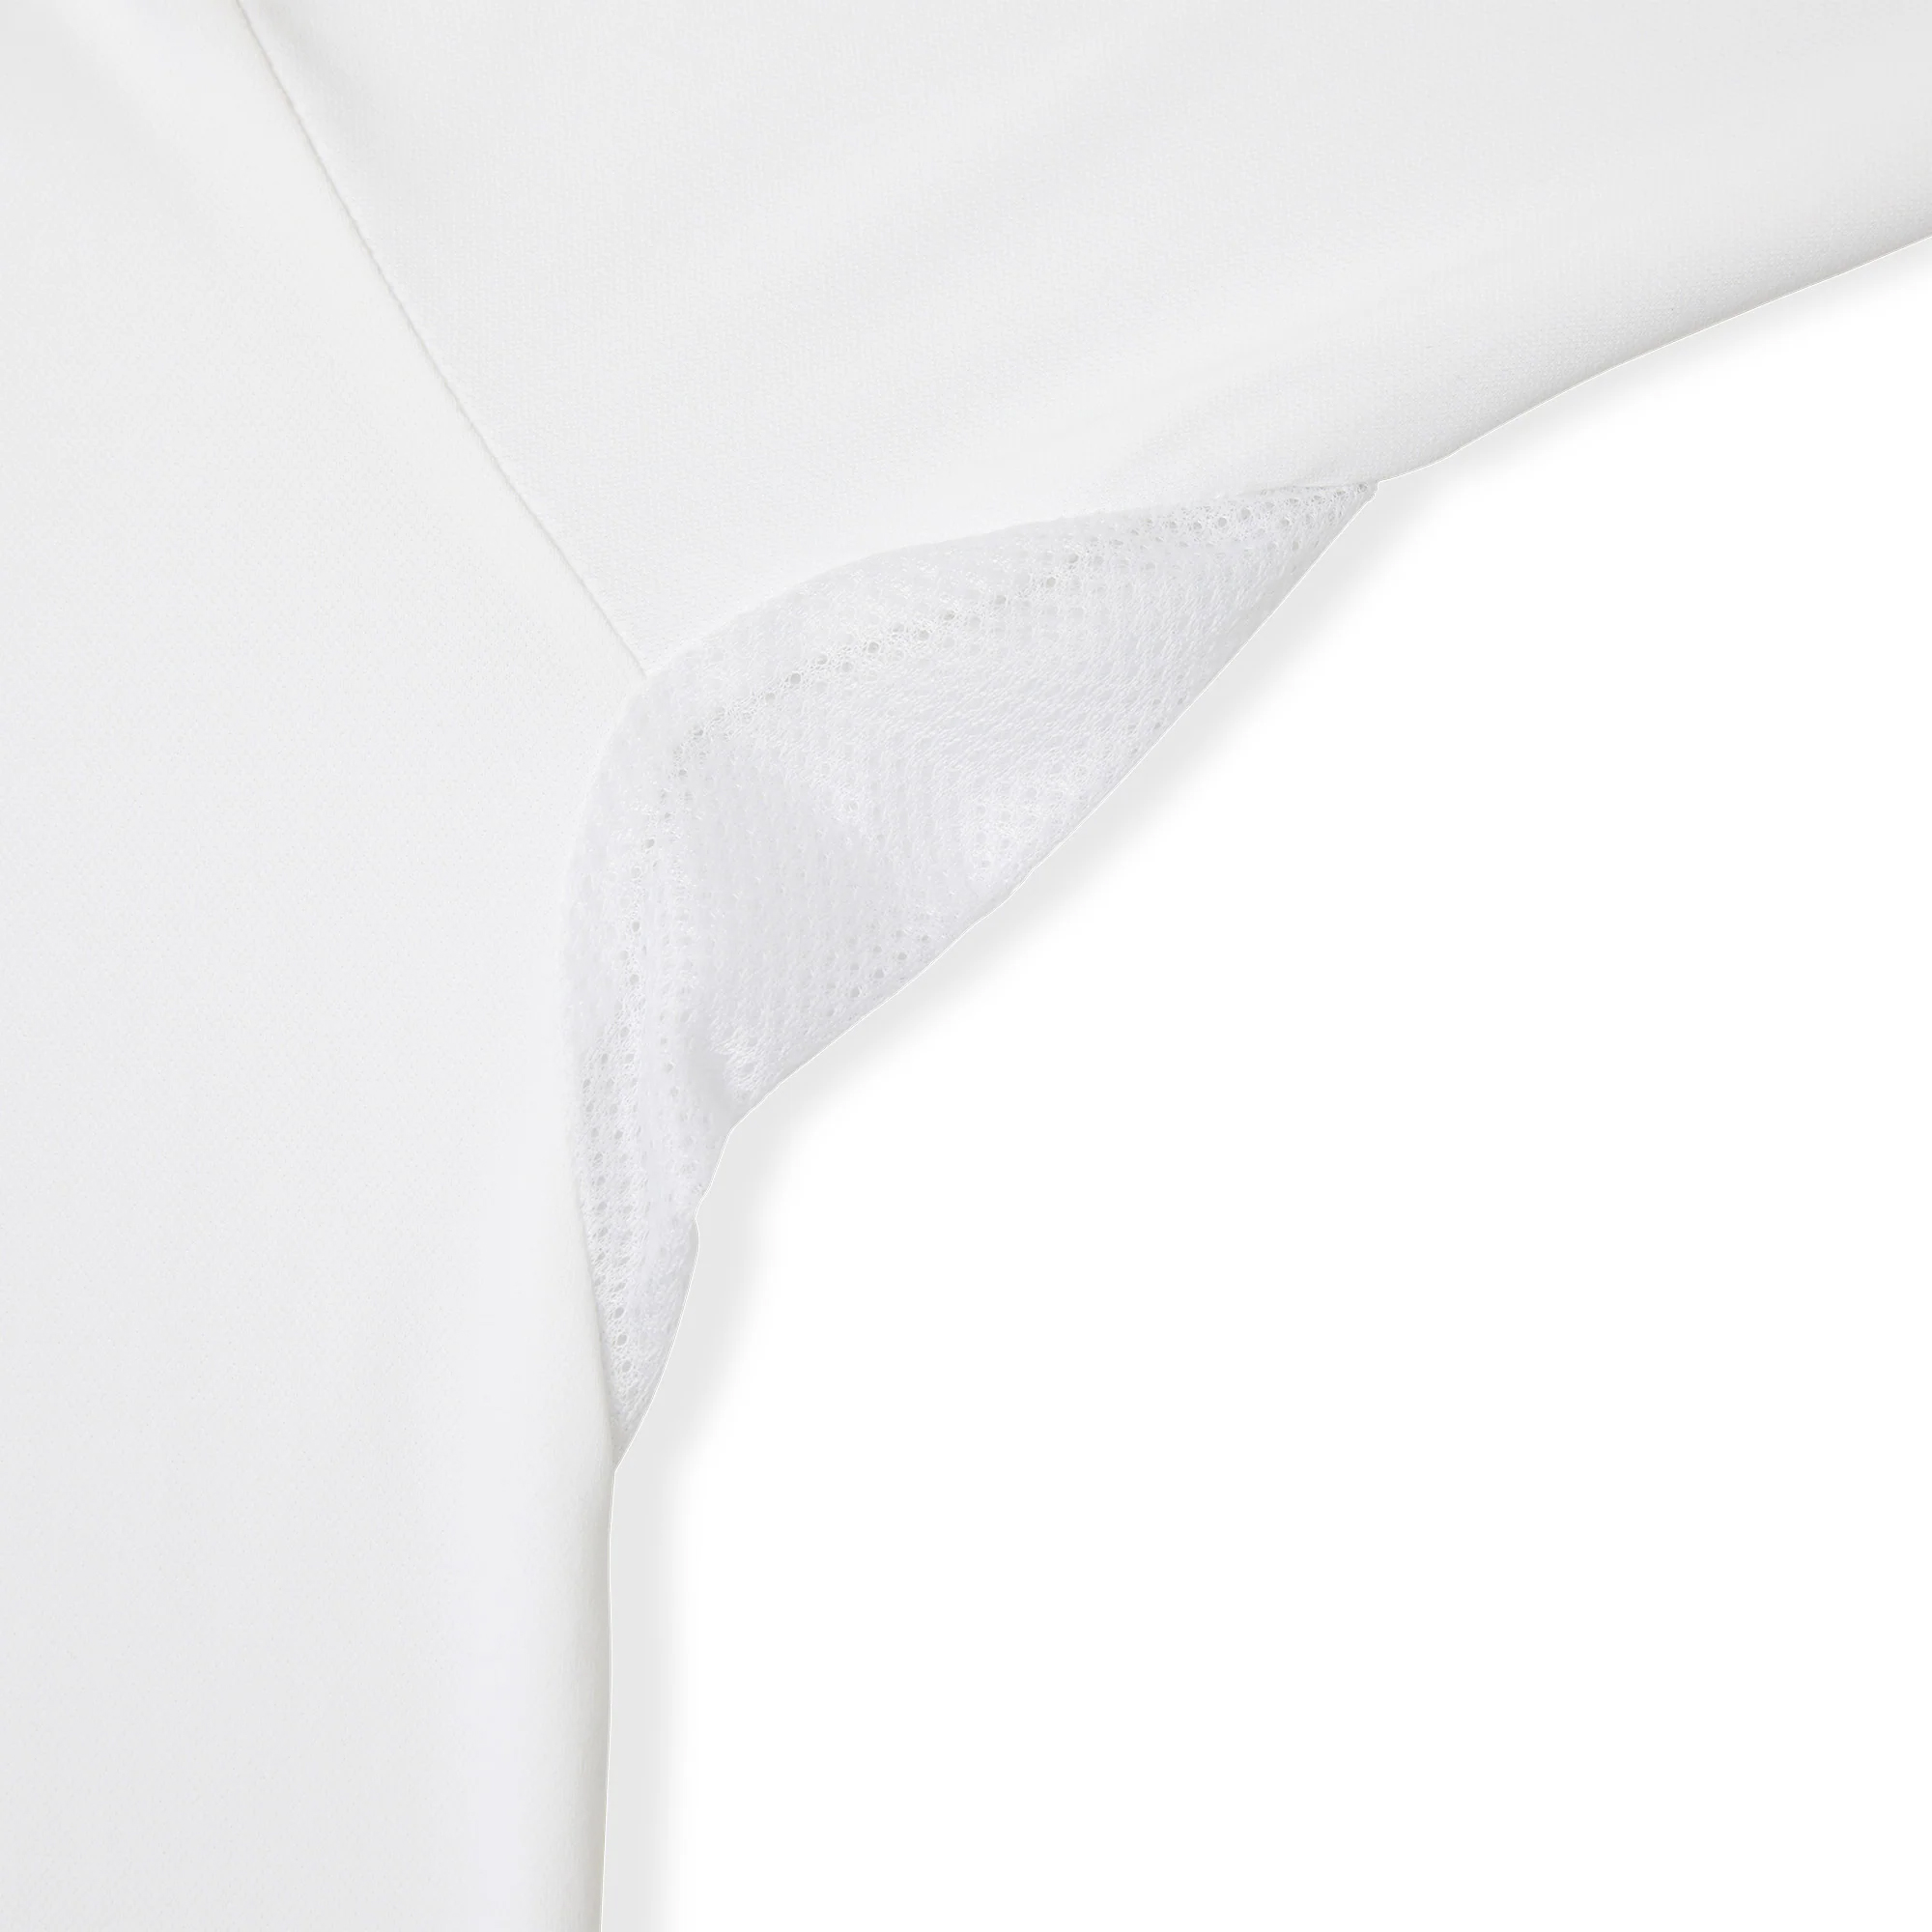 Pelagic Aquatek Marlin Long Sleeve Performance Shirt - Armpit Detail